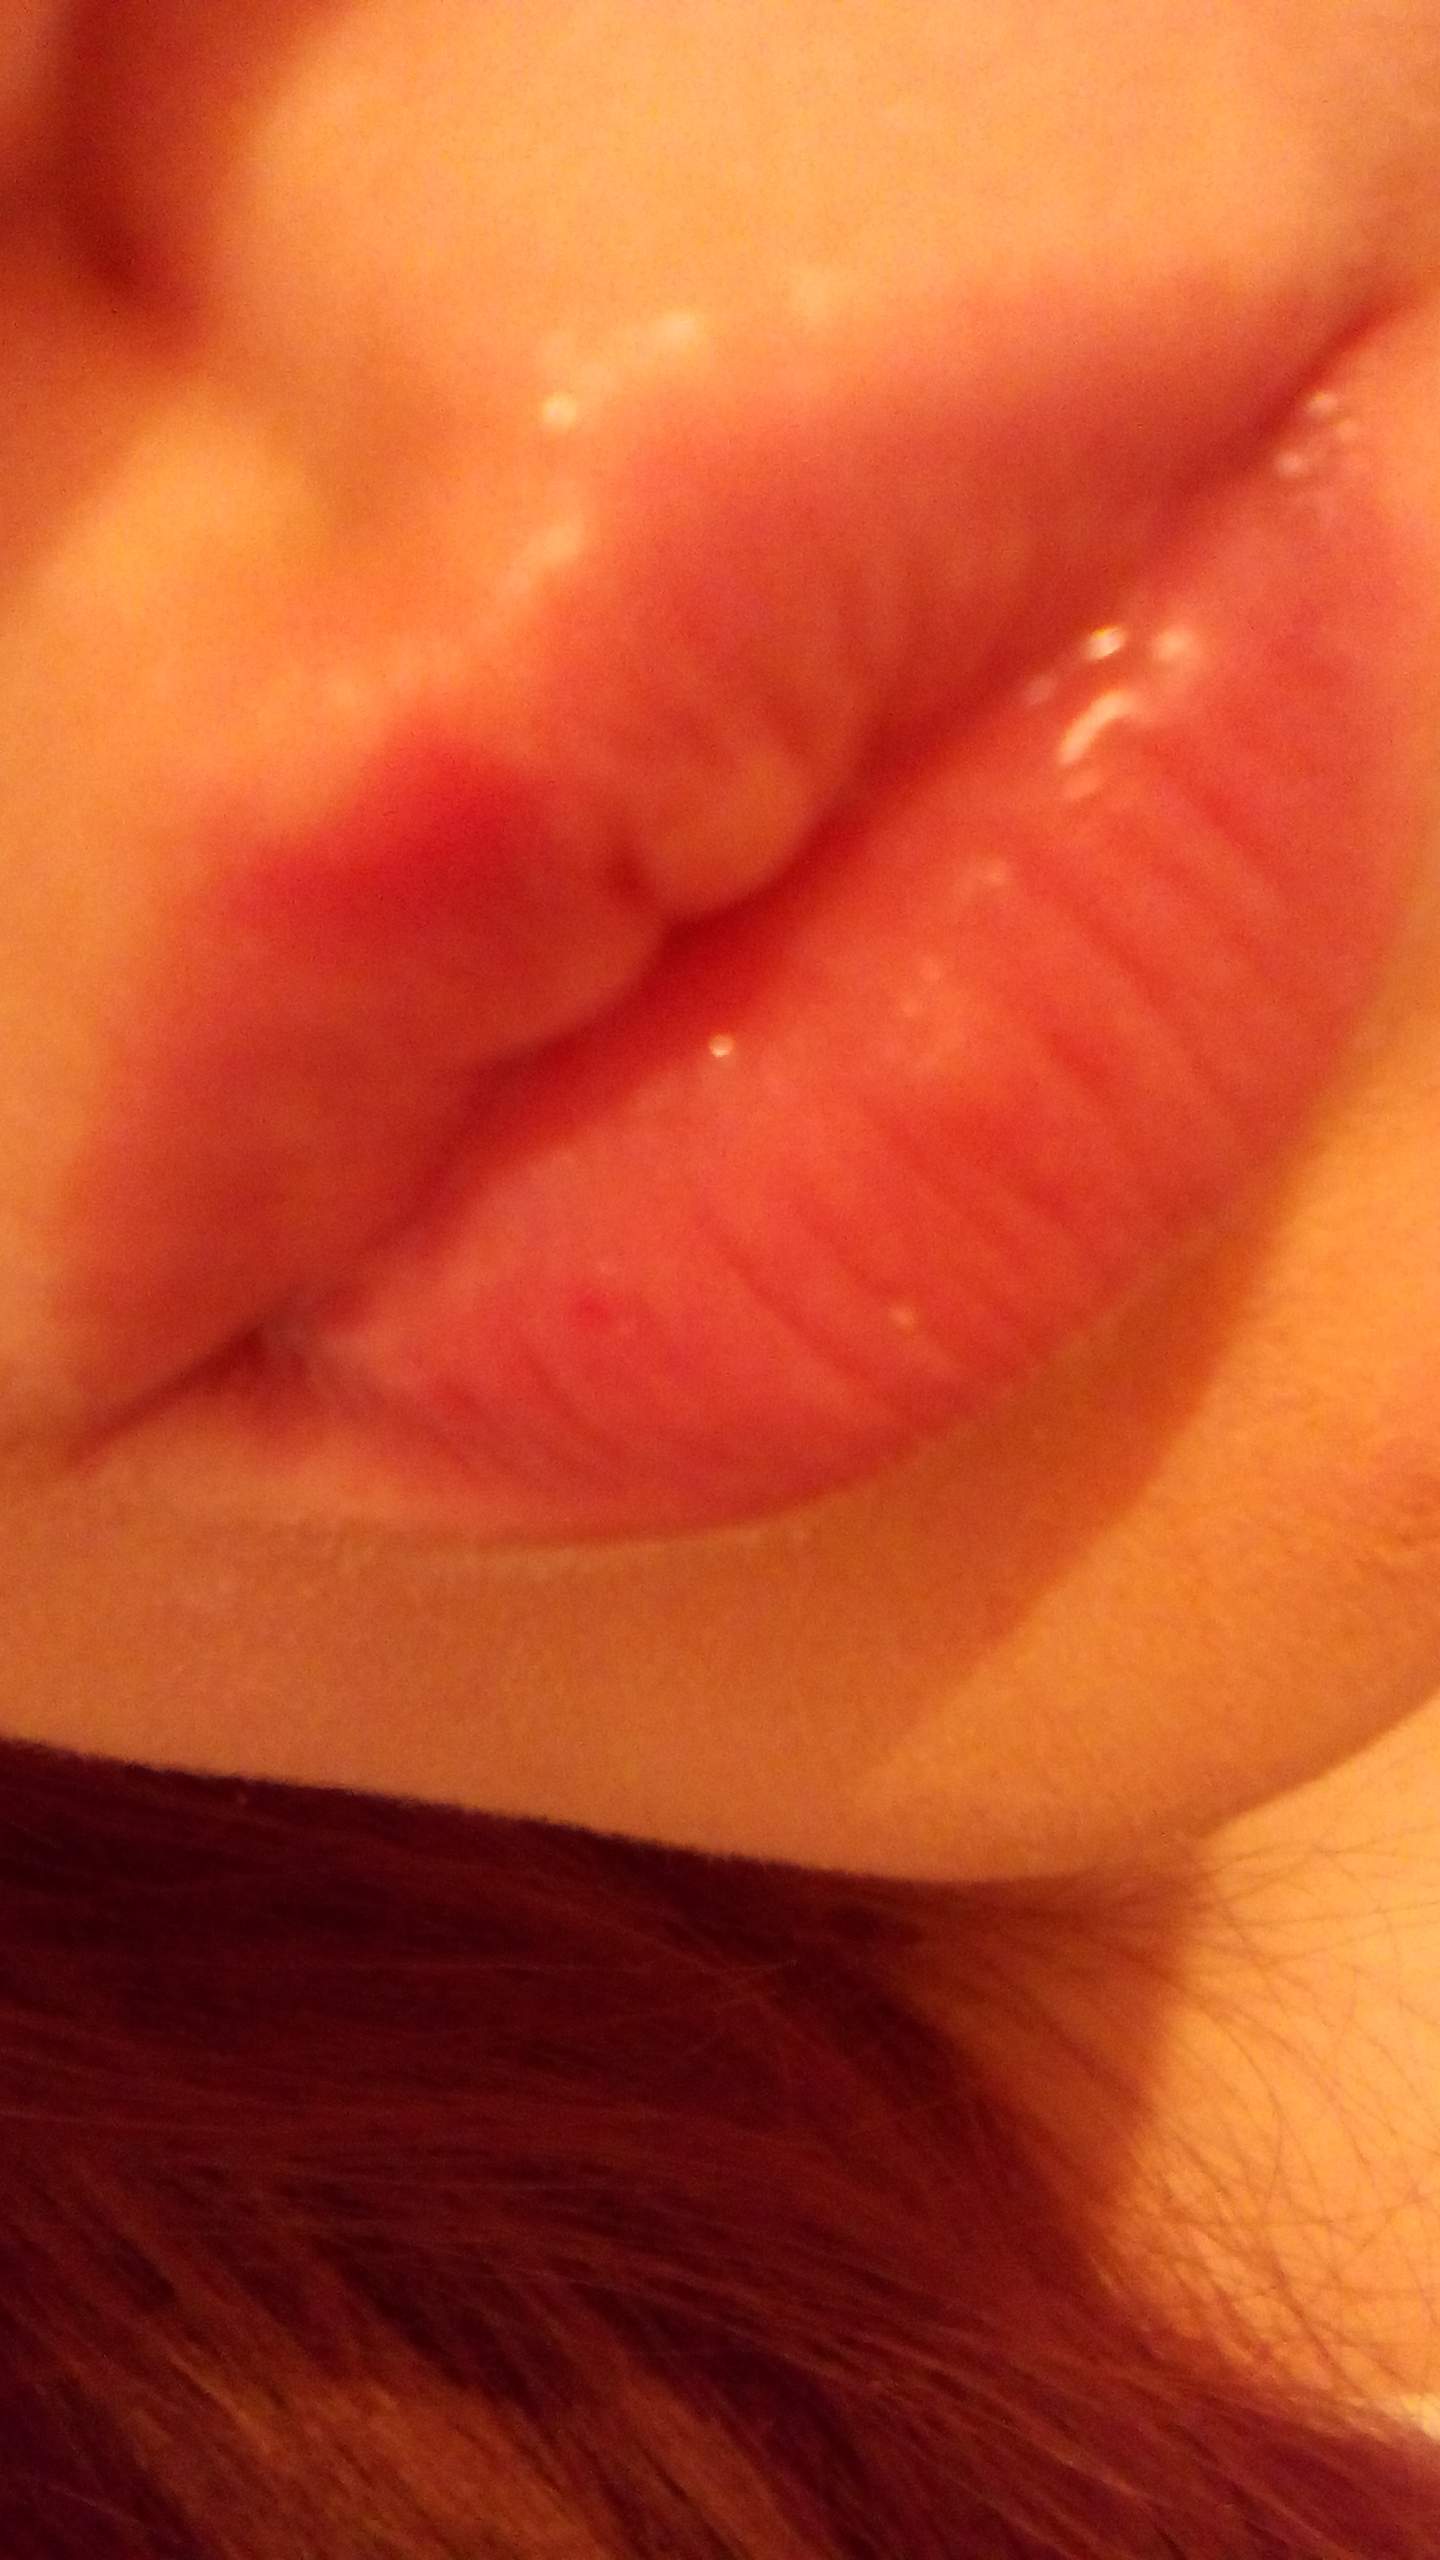 Roter rand um lippen